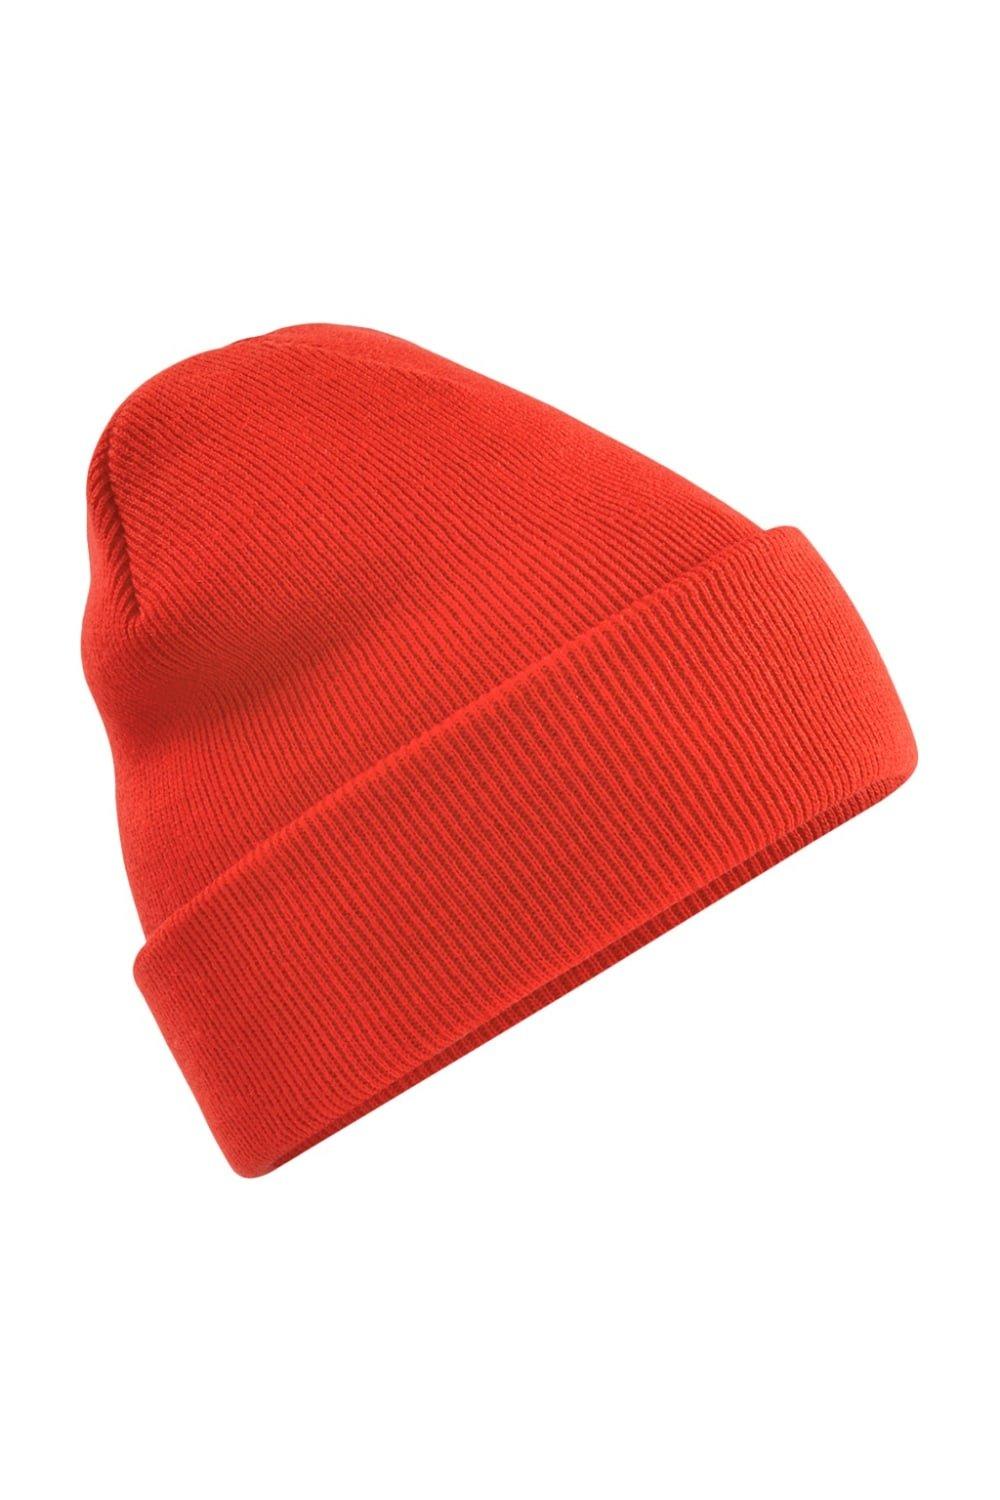 Оригинальная зимняя шапка-бини с манжетами Beechfield, красный оригинальная зимняя шапка бини с манжетами beechfield красный